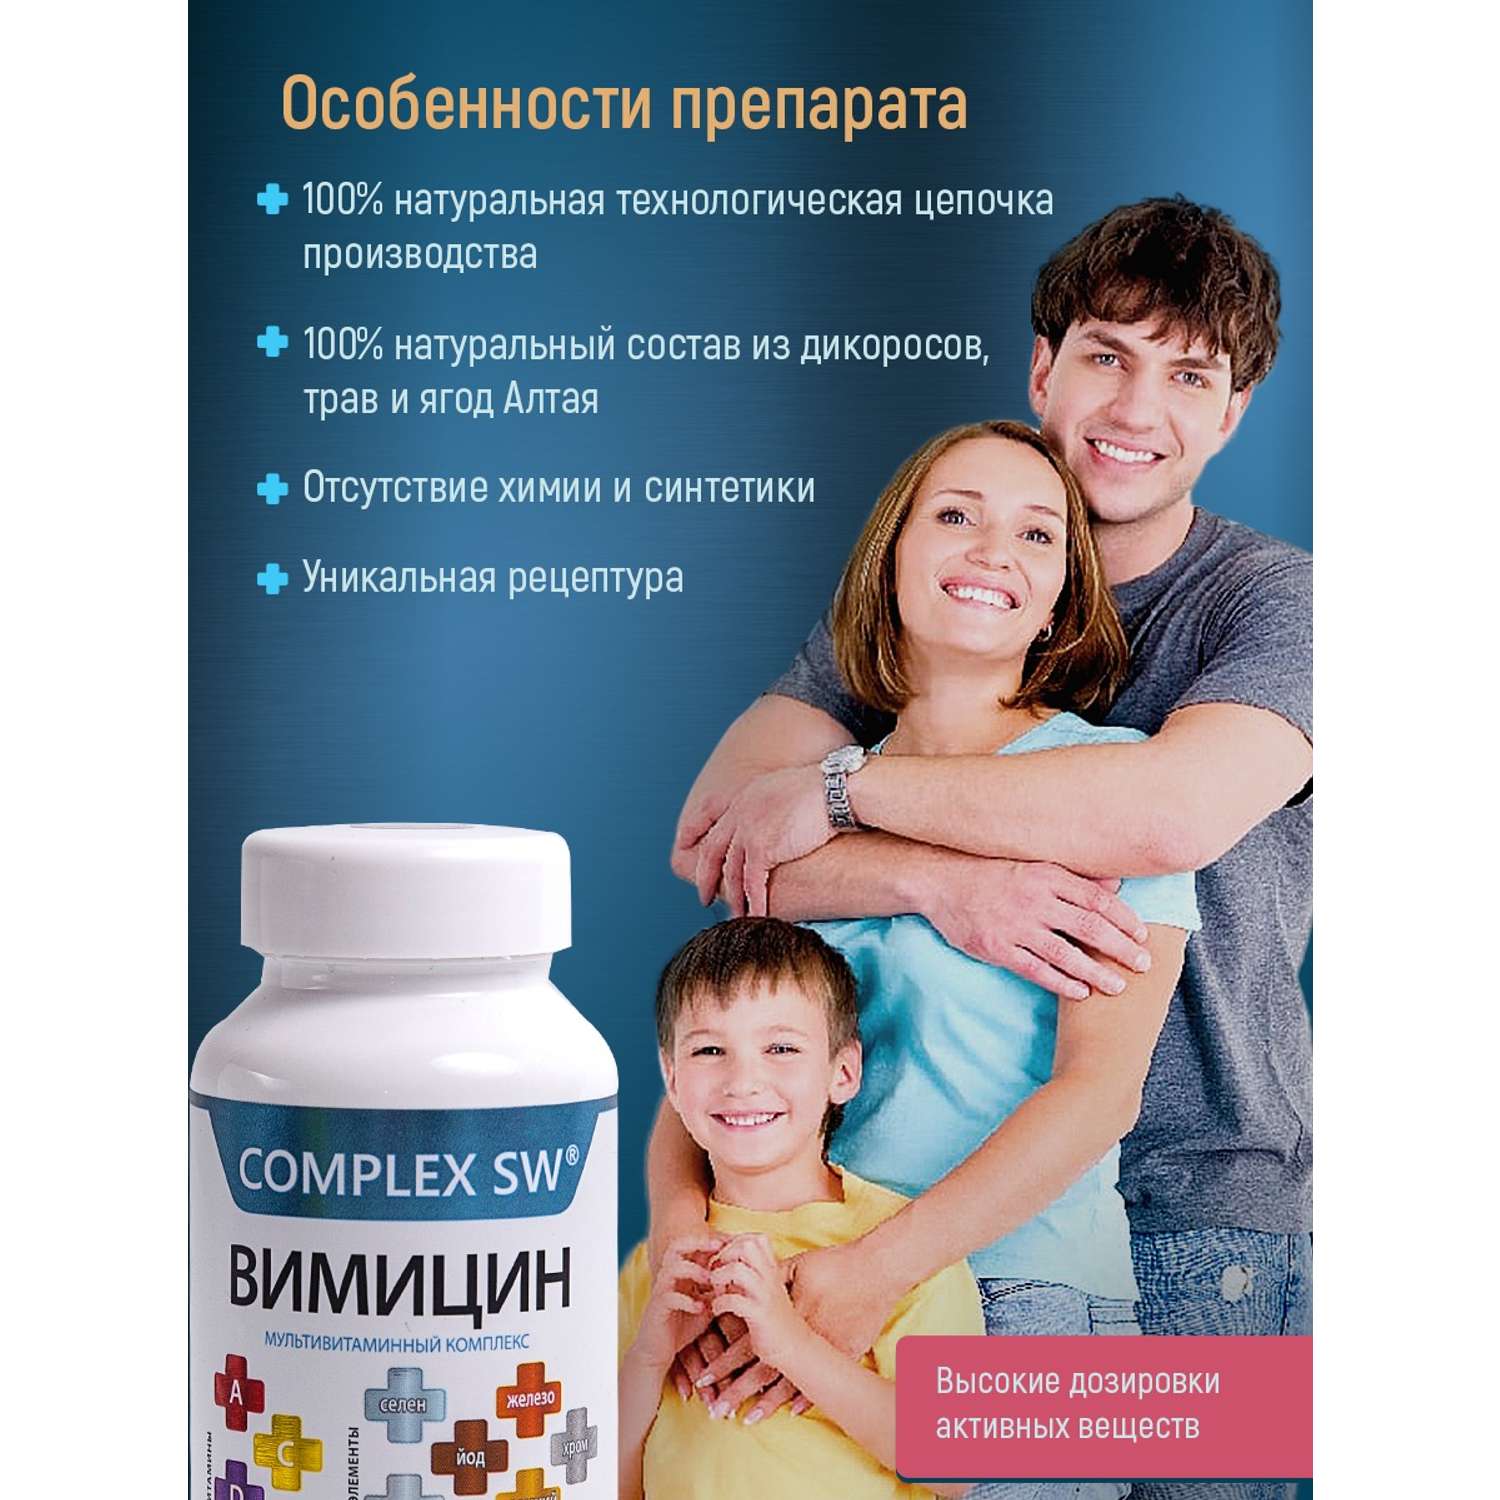 Комплекс Вимицин Оптисалт витамины и микроэлементы 60 капсул - фото 4